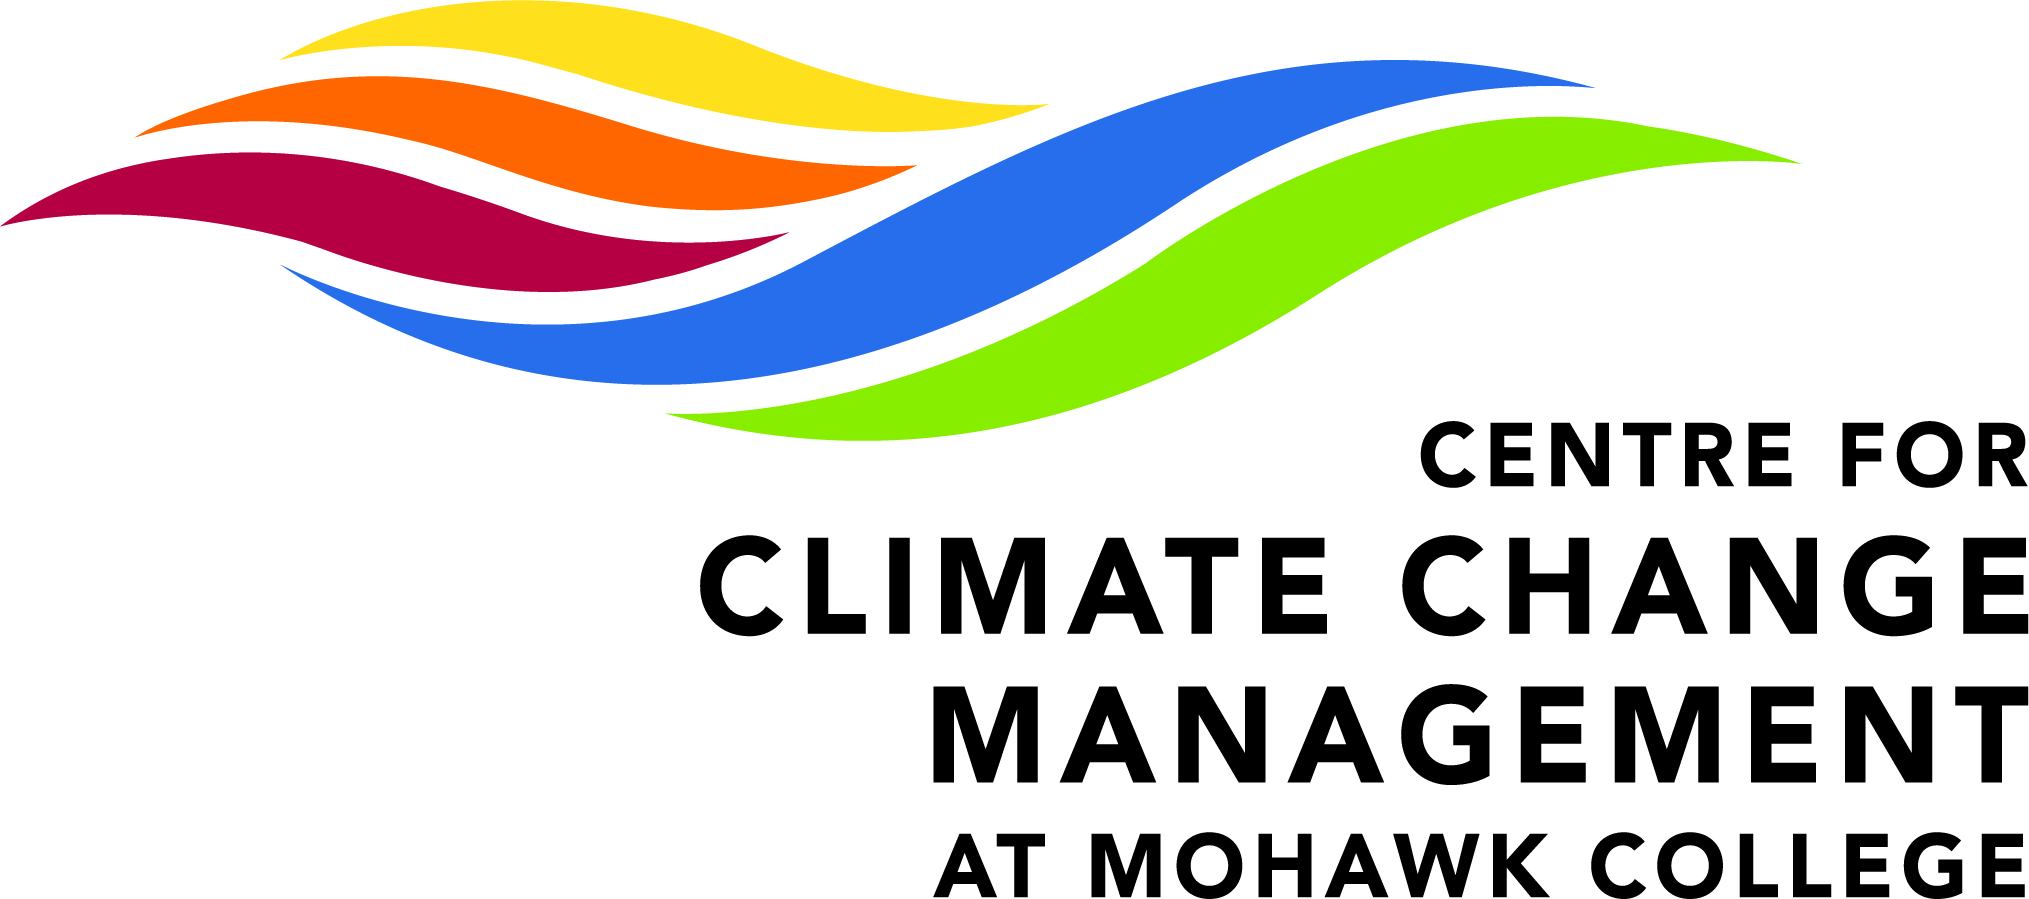 Centre for Climate Change Management logo.jpg